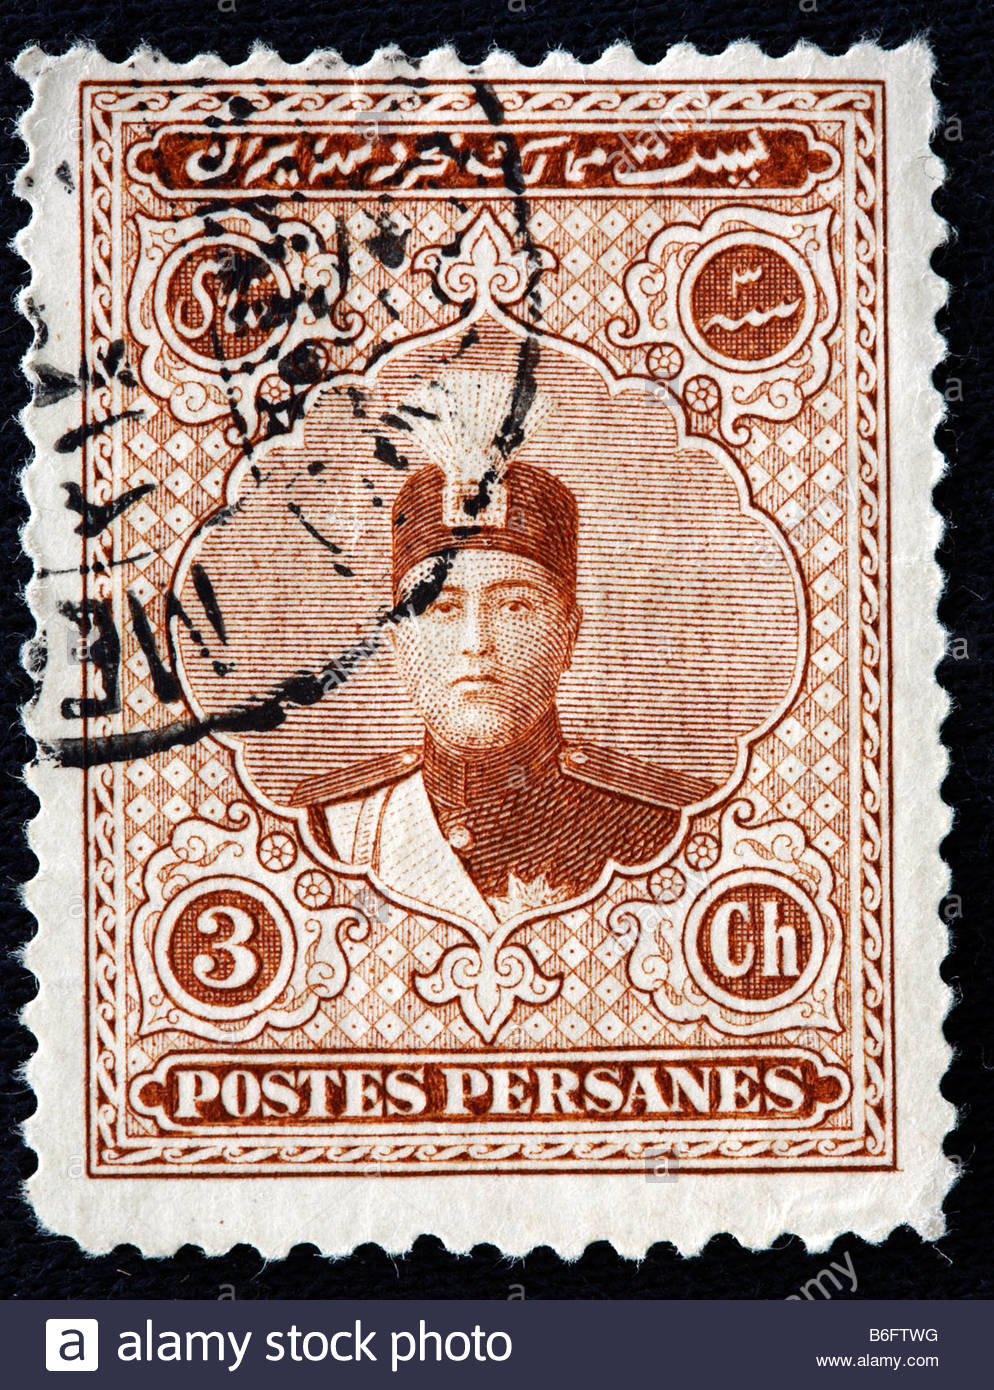 Ahmad Shah Qajar, Shah of Persia (Iran) (1909-1925), postage stamp